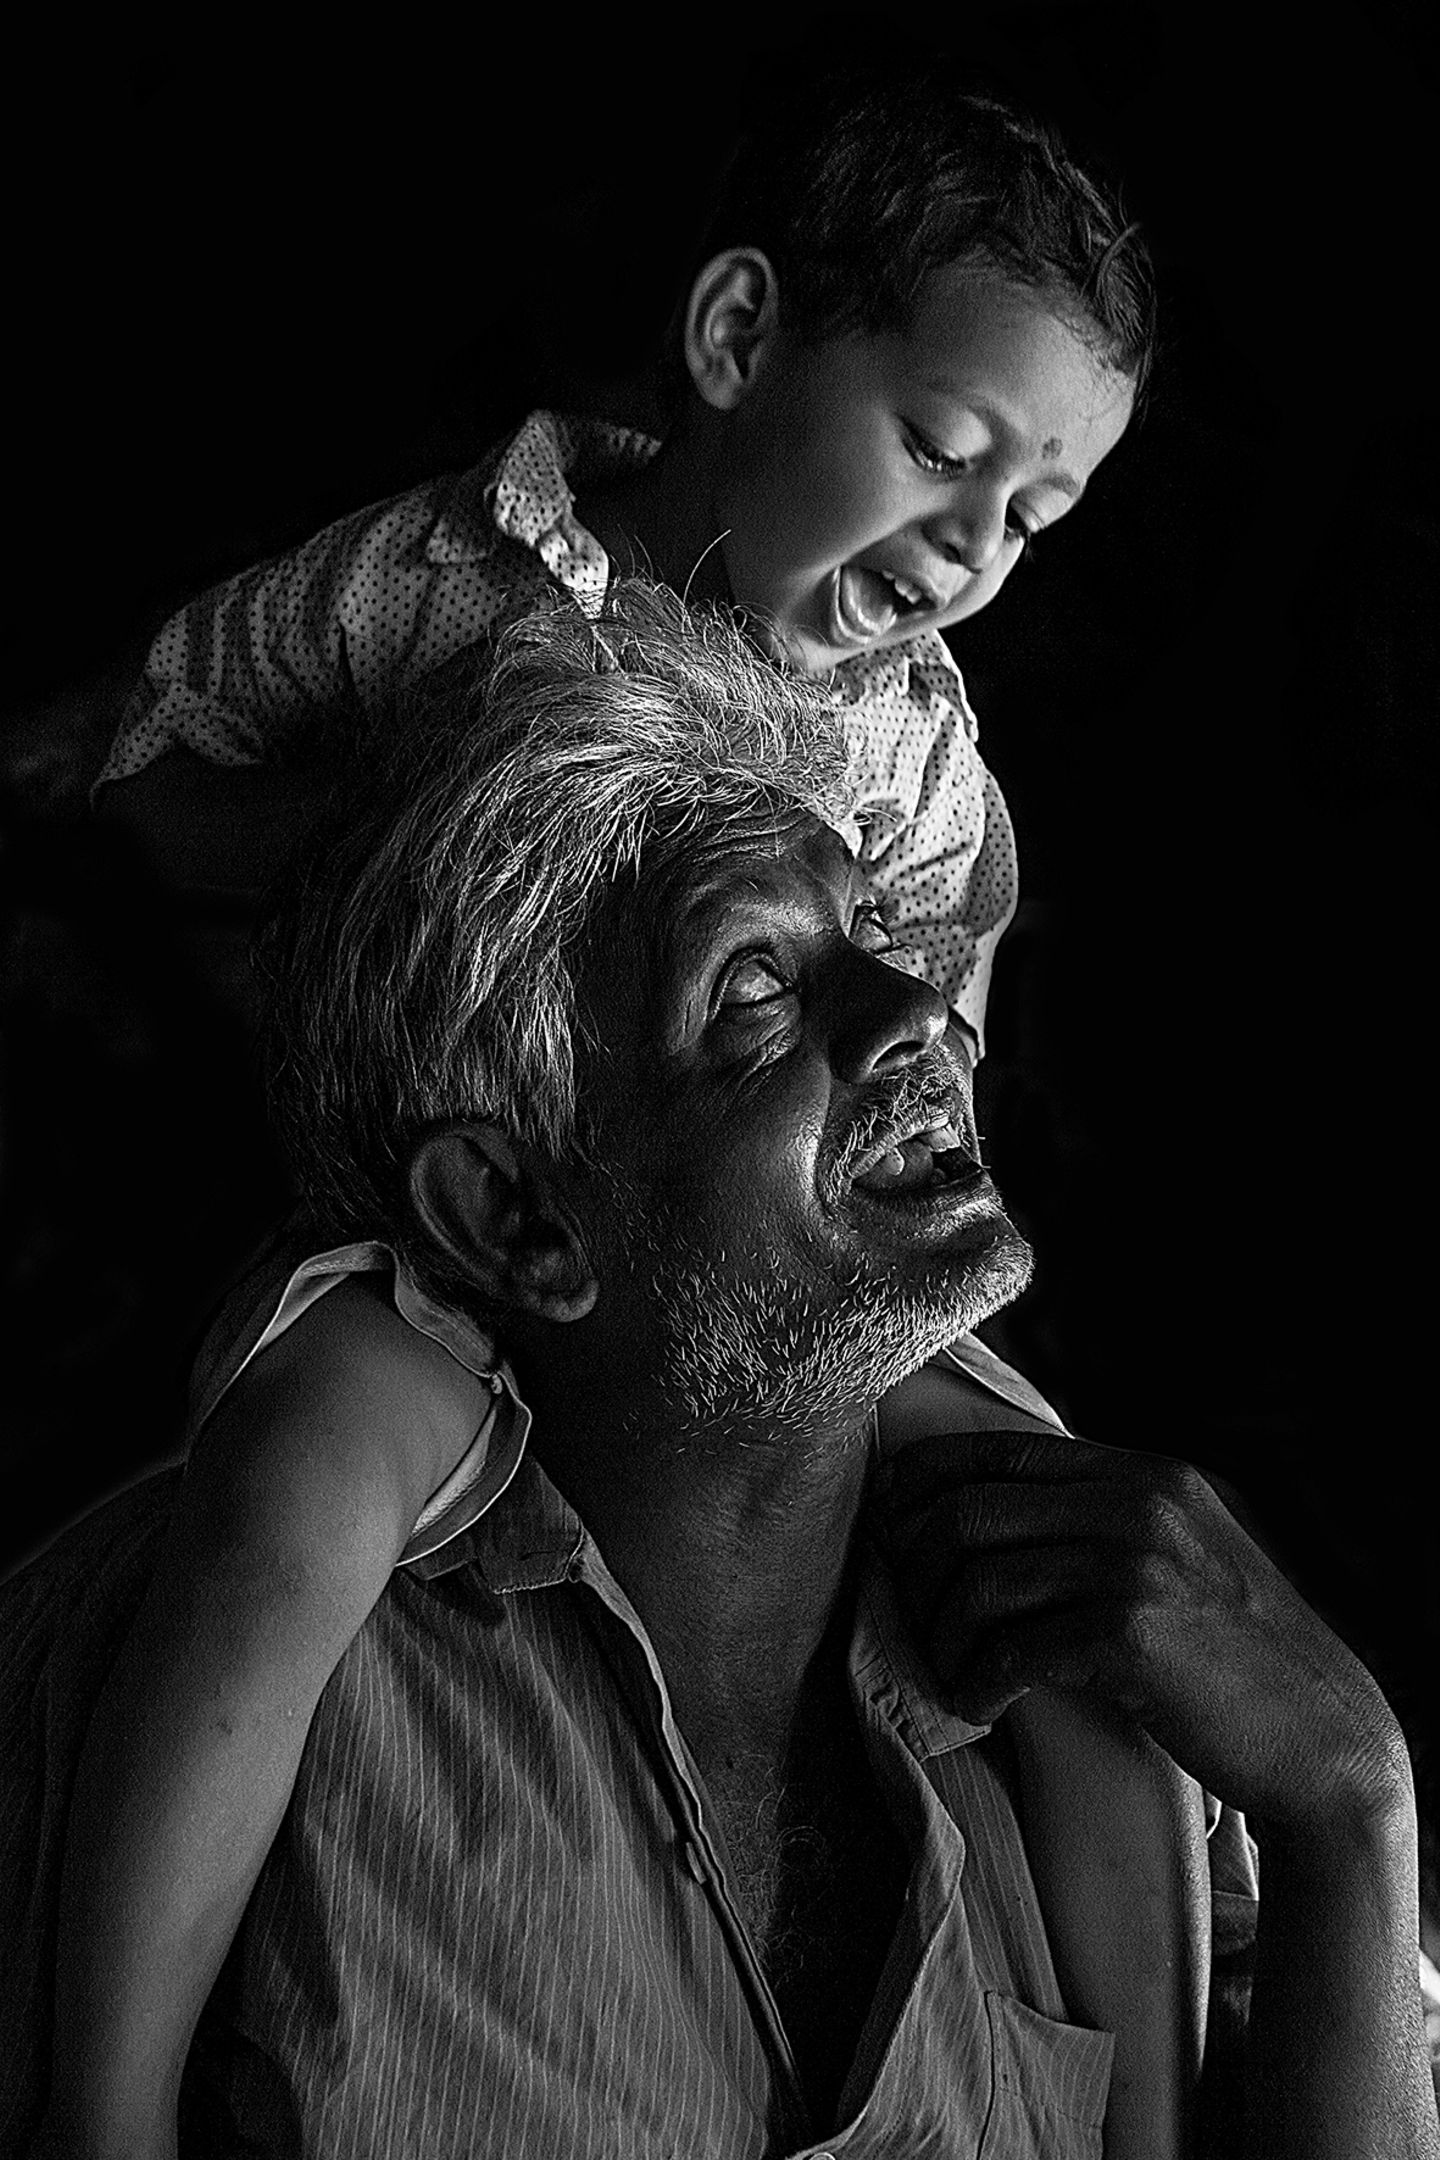 "Emotion of Grandfather" – Emotion eines Großvaters